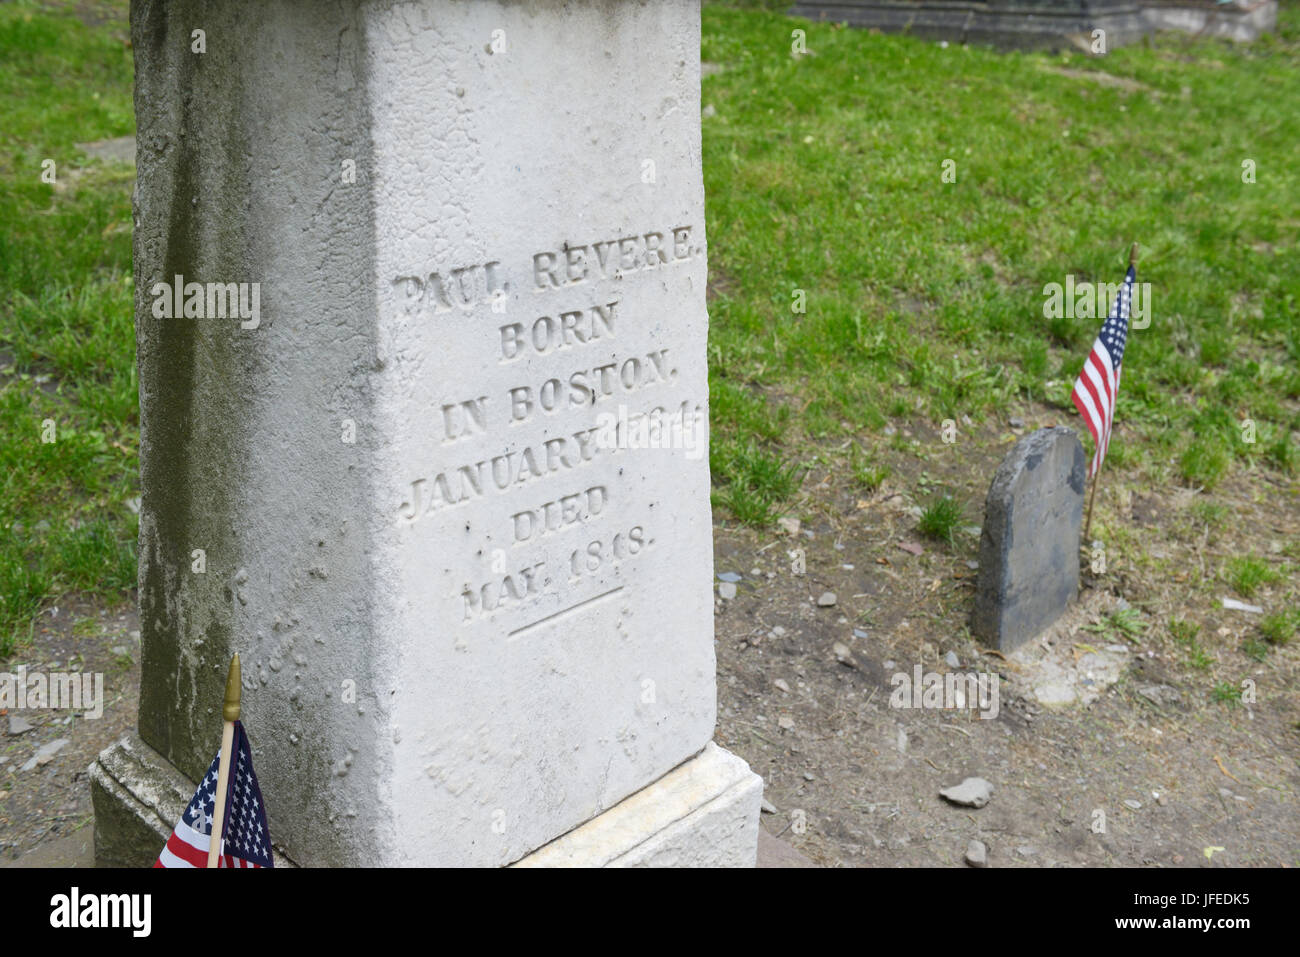 Paul Revere's gravestone, Boston, MA Banque D'Images